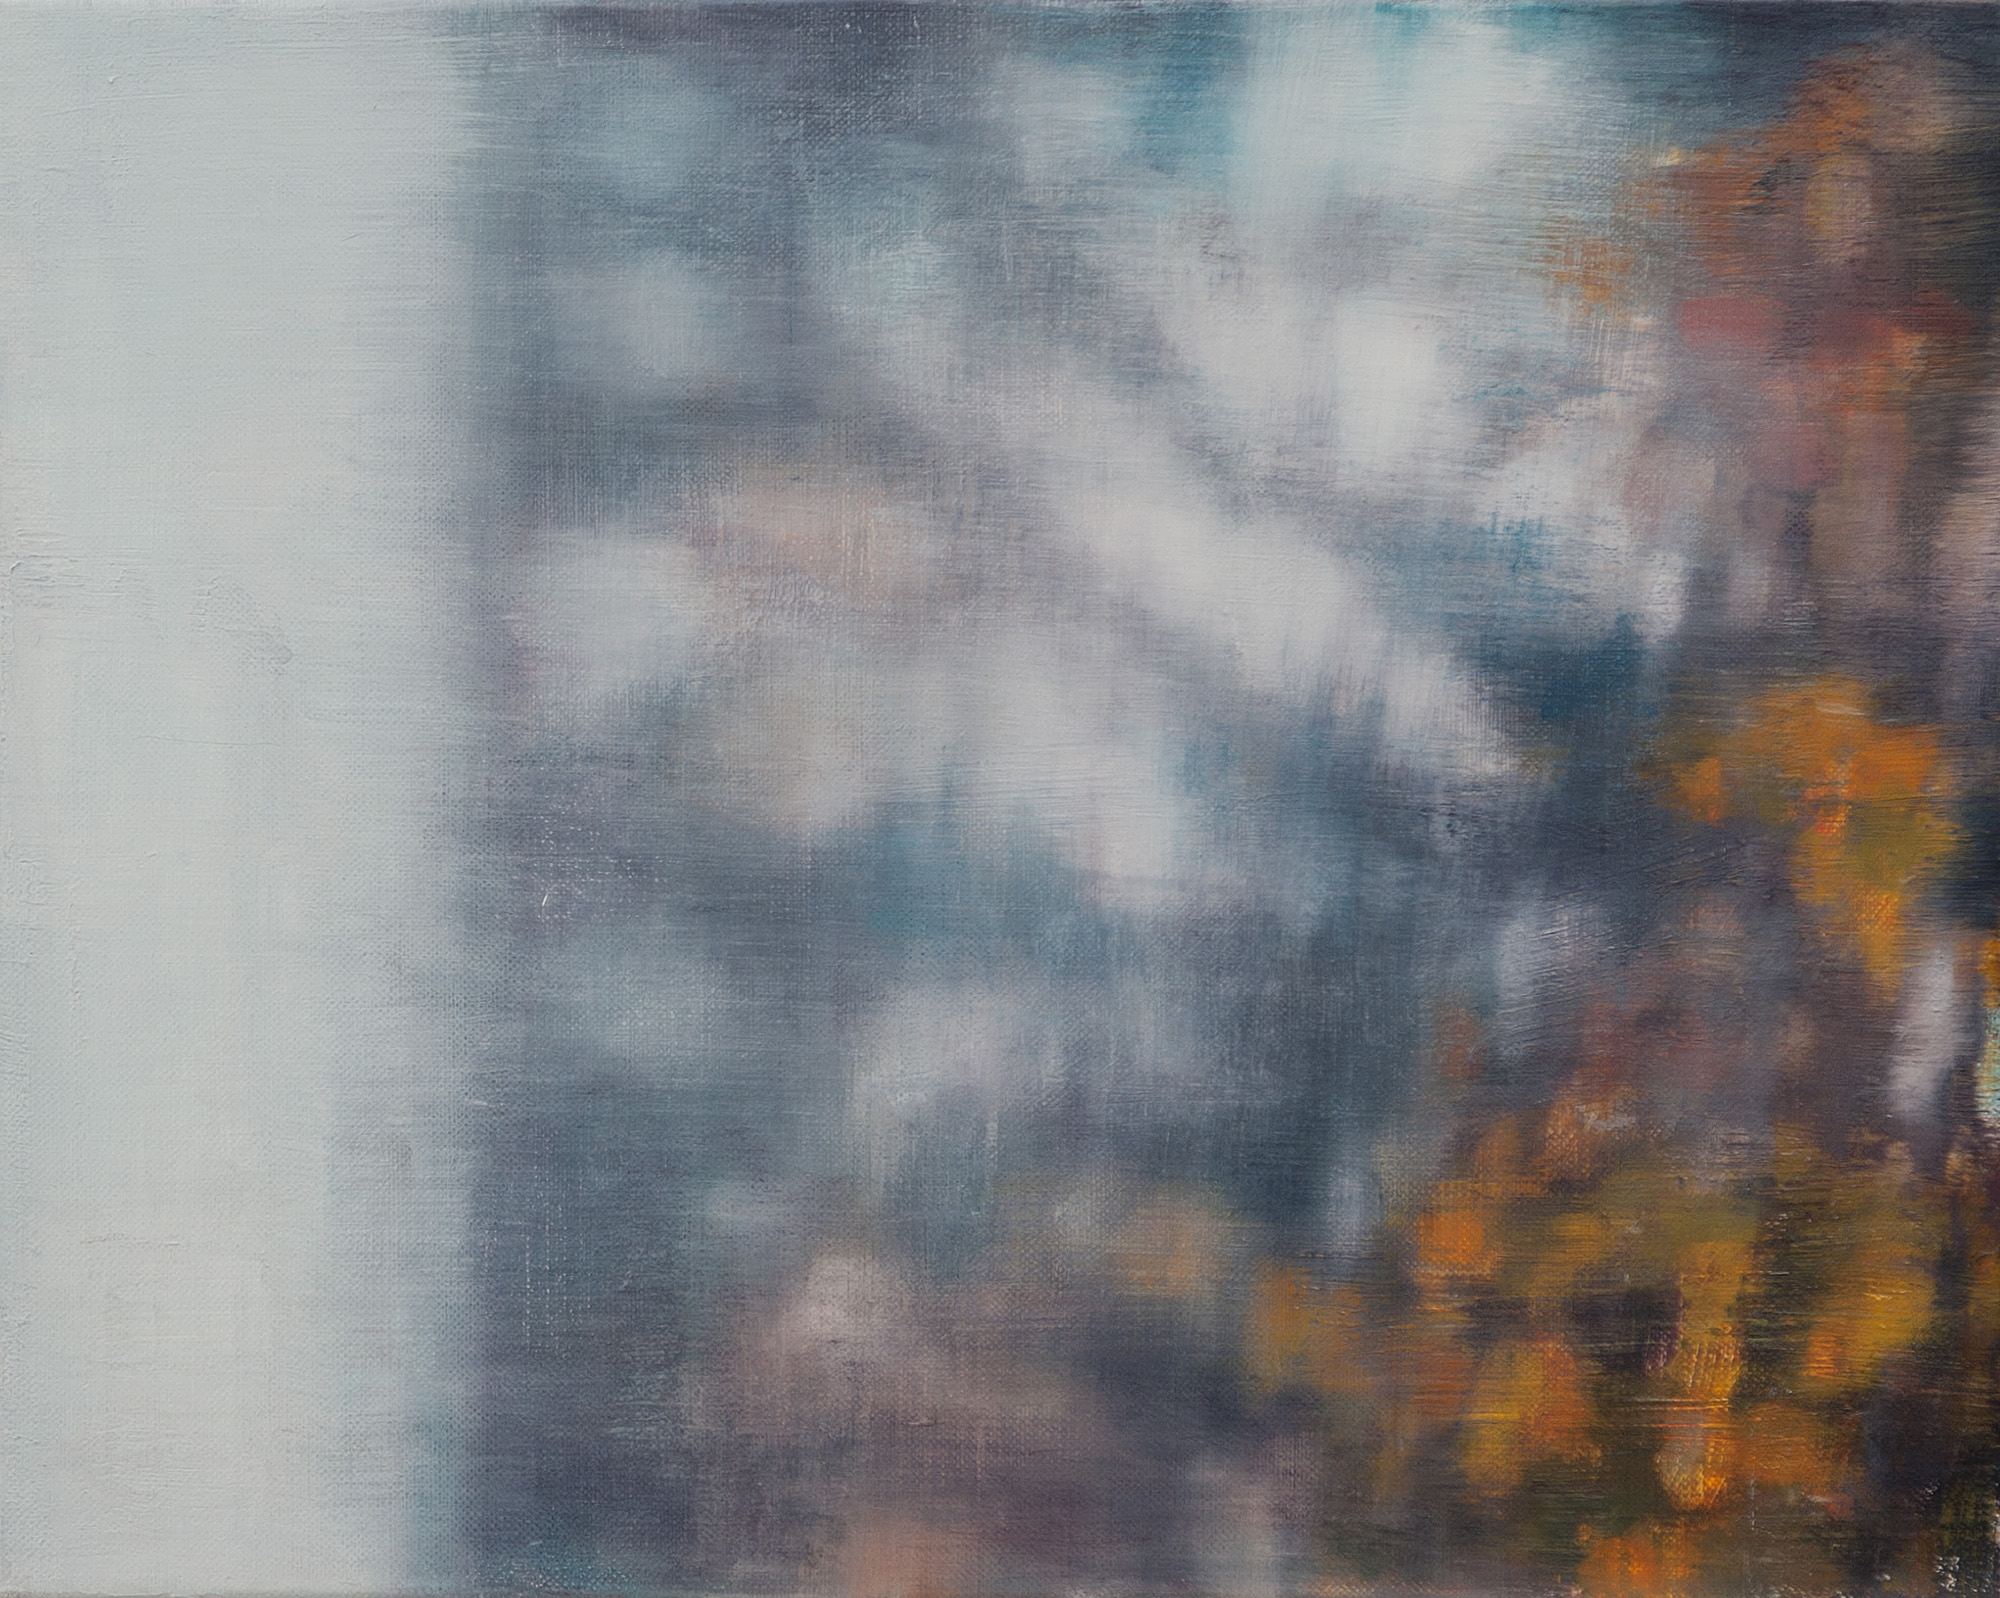  Joanna Logue,&nbsp; Essington - Window II,  2015, oil on linen on board, 40 x 50cm 